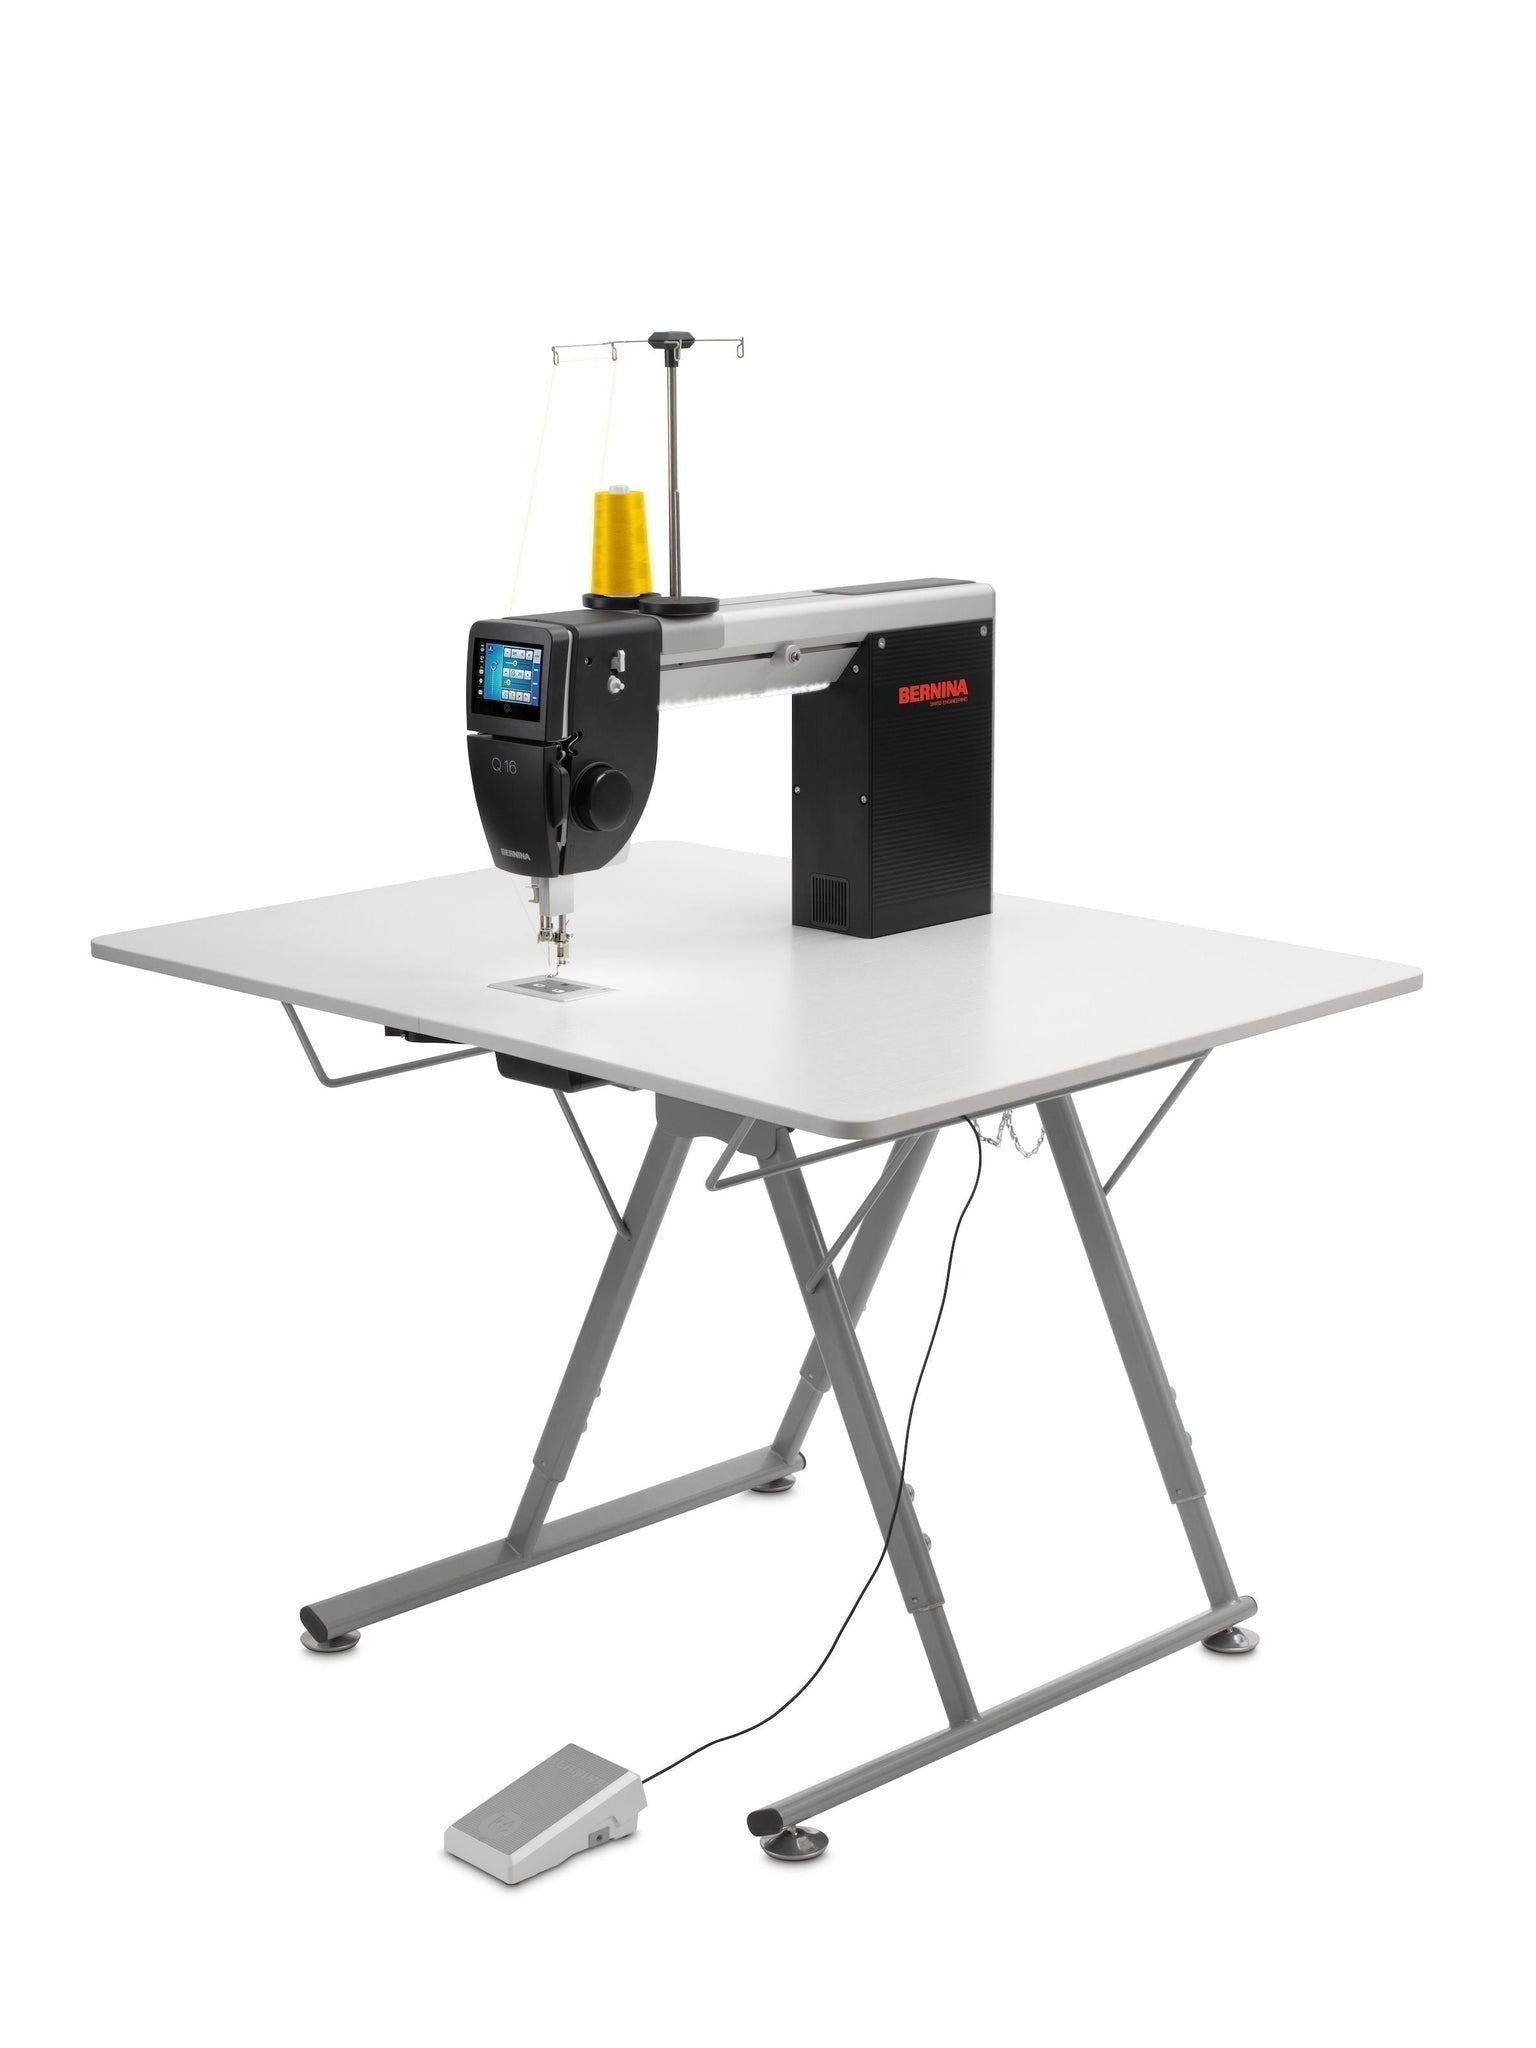 BERNINA-Q Series Sit-Down-sewing machine-gather here online